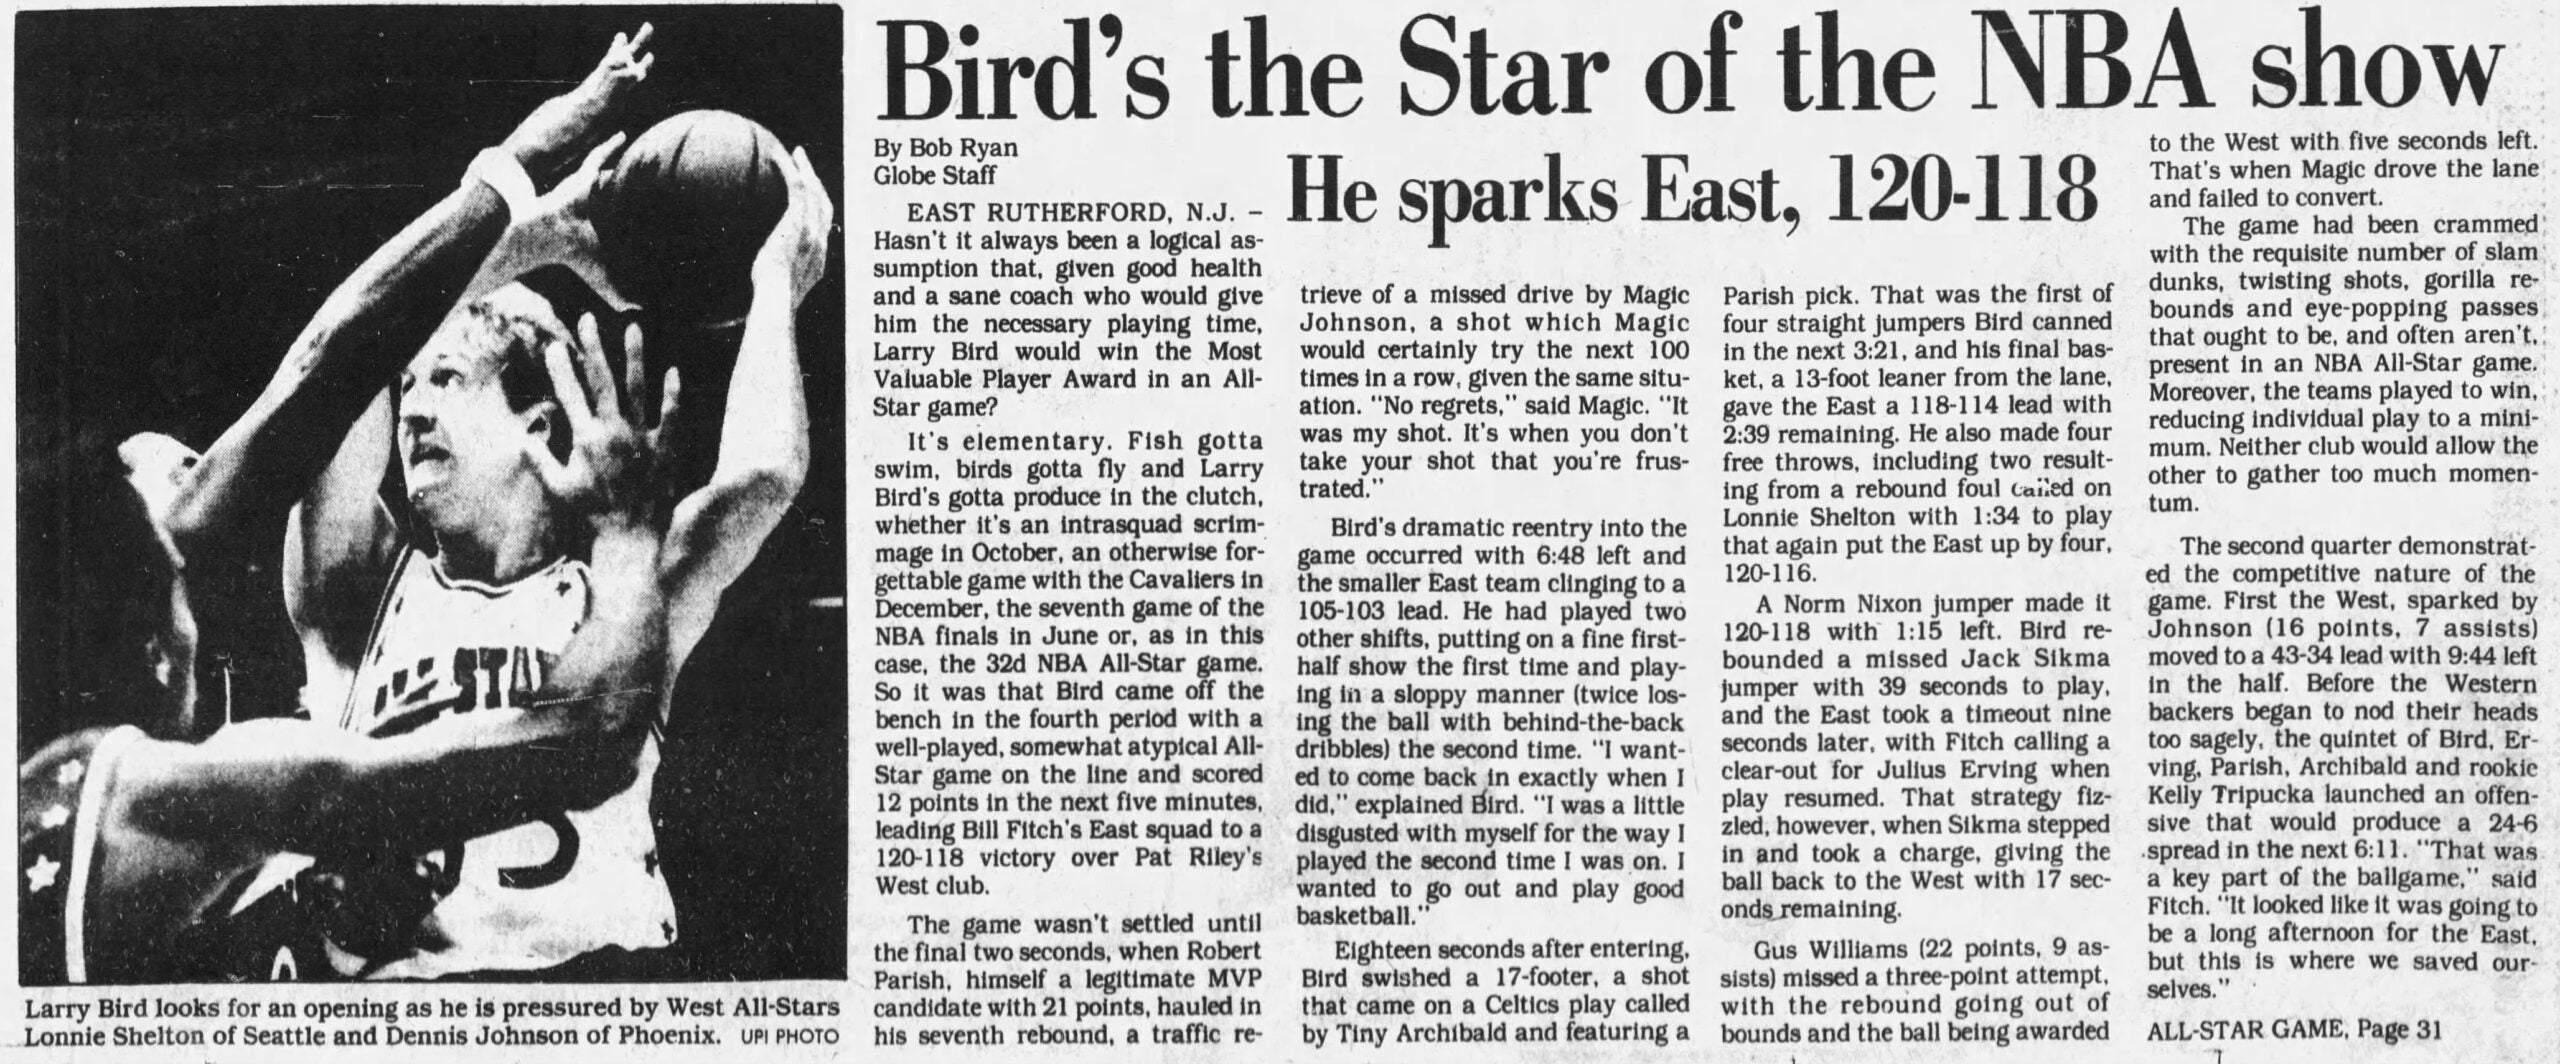 Larry Bird 1982 all-star game